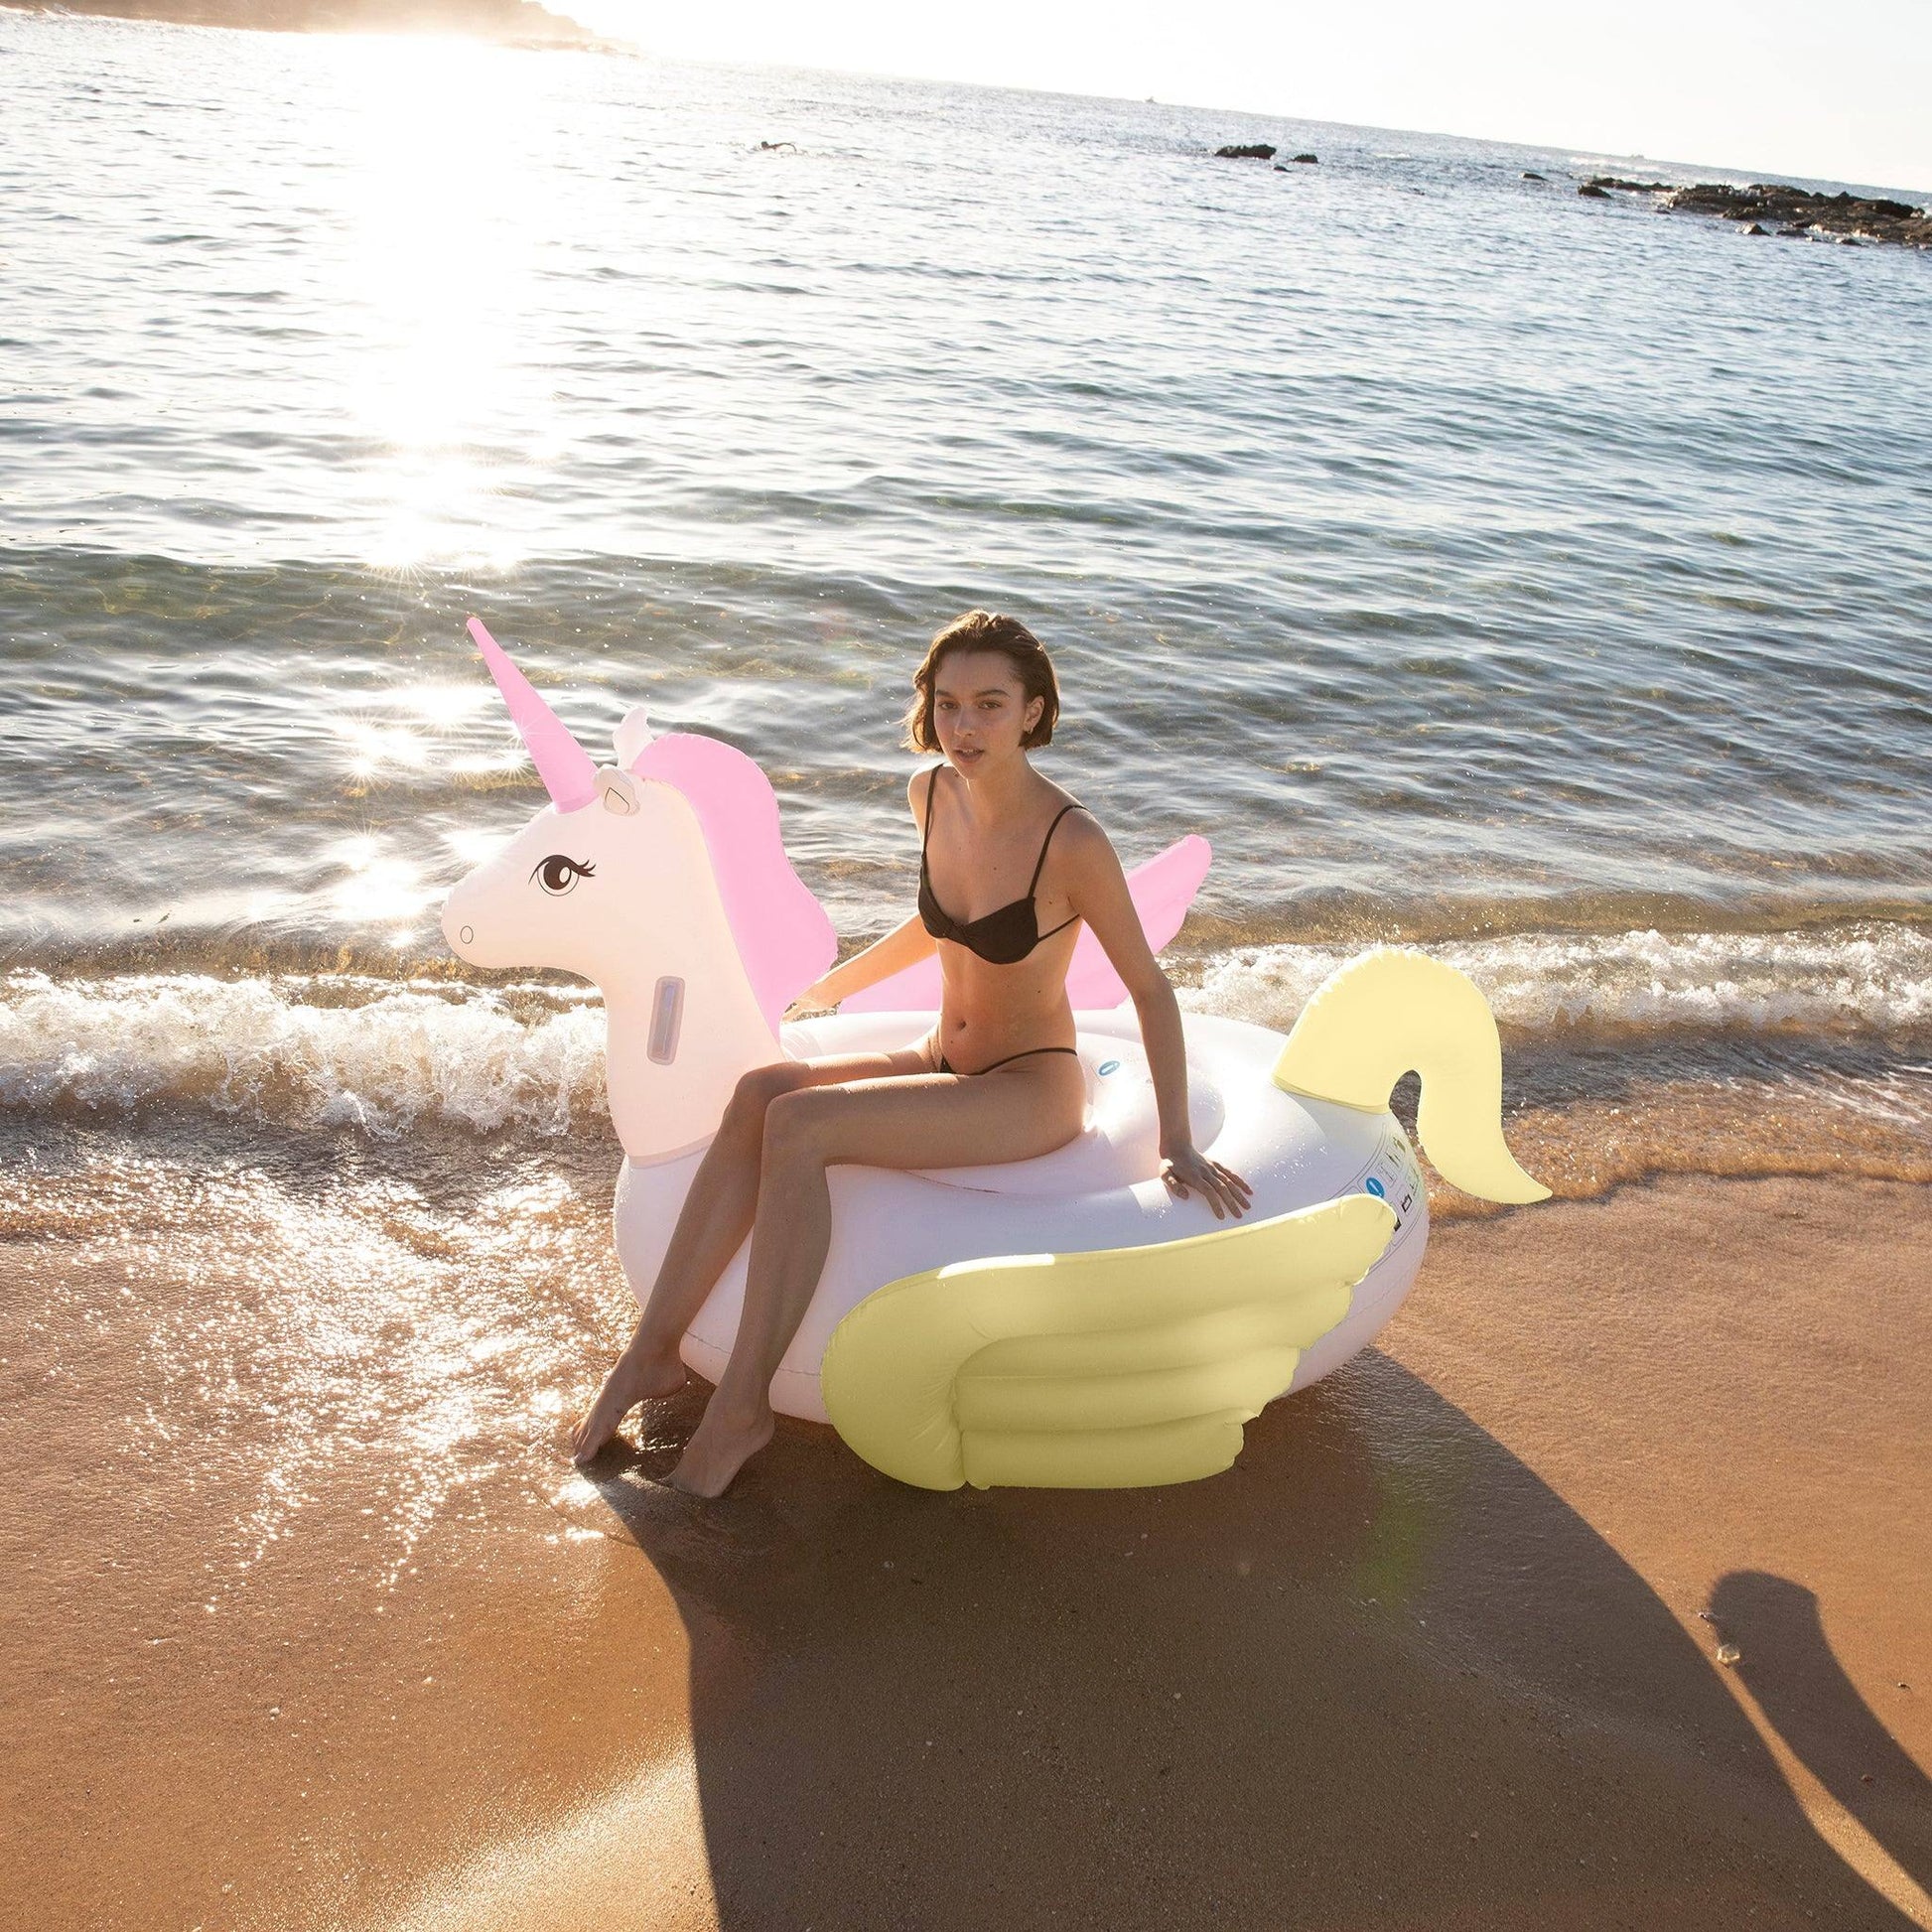 sunnylife Unicorn Luxe Ride-On Float - partyalacarte.co.in